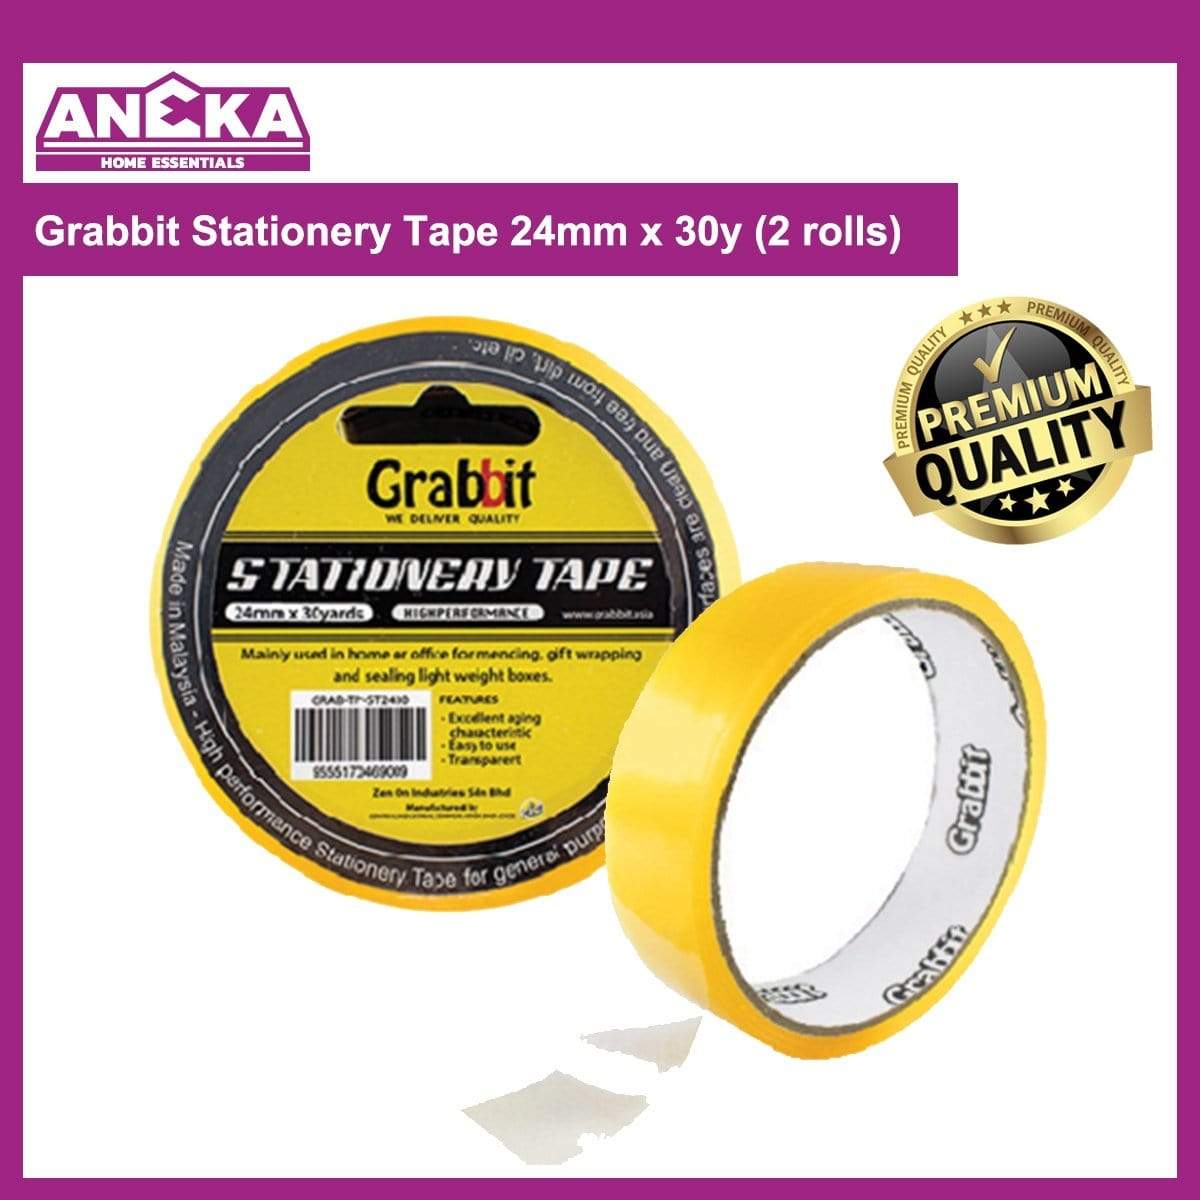 Grabbit Stationery Tape 24mm x 30y (2 rolls)